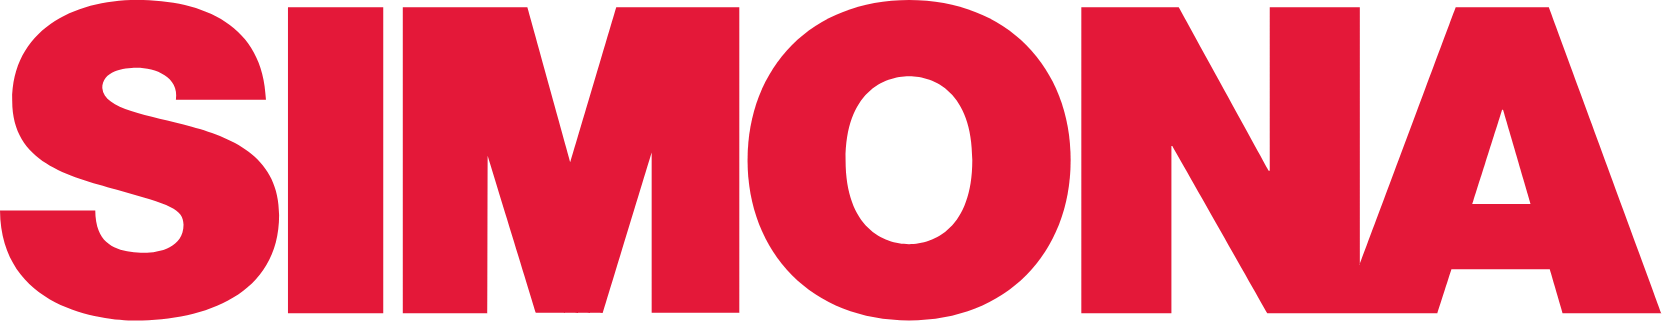 Simona logo large (transparent PNG)